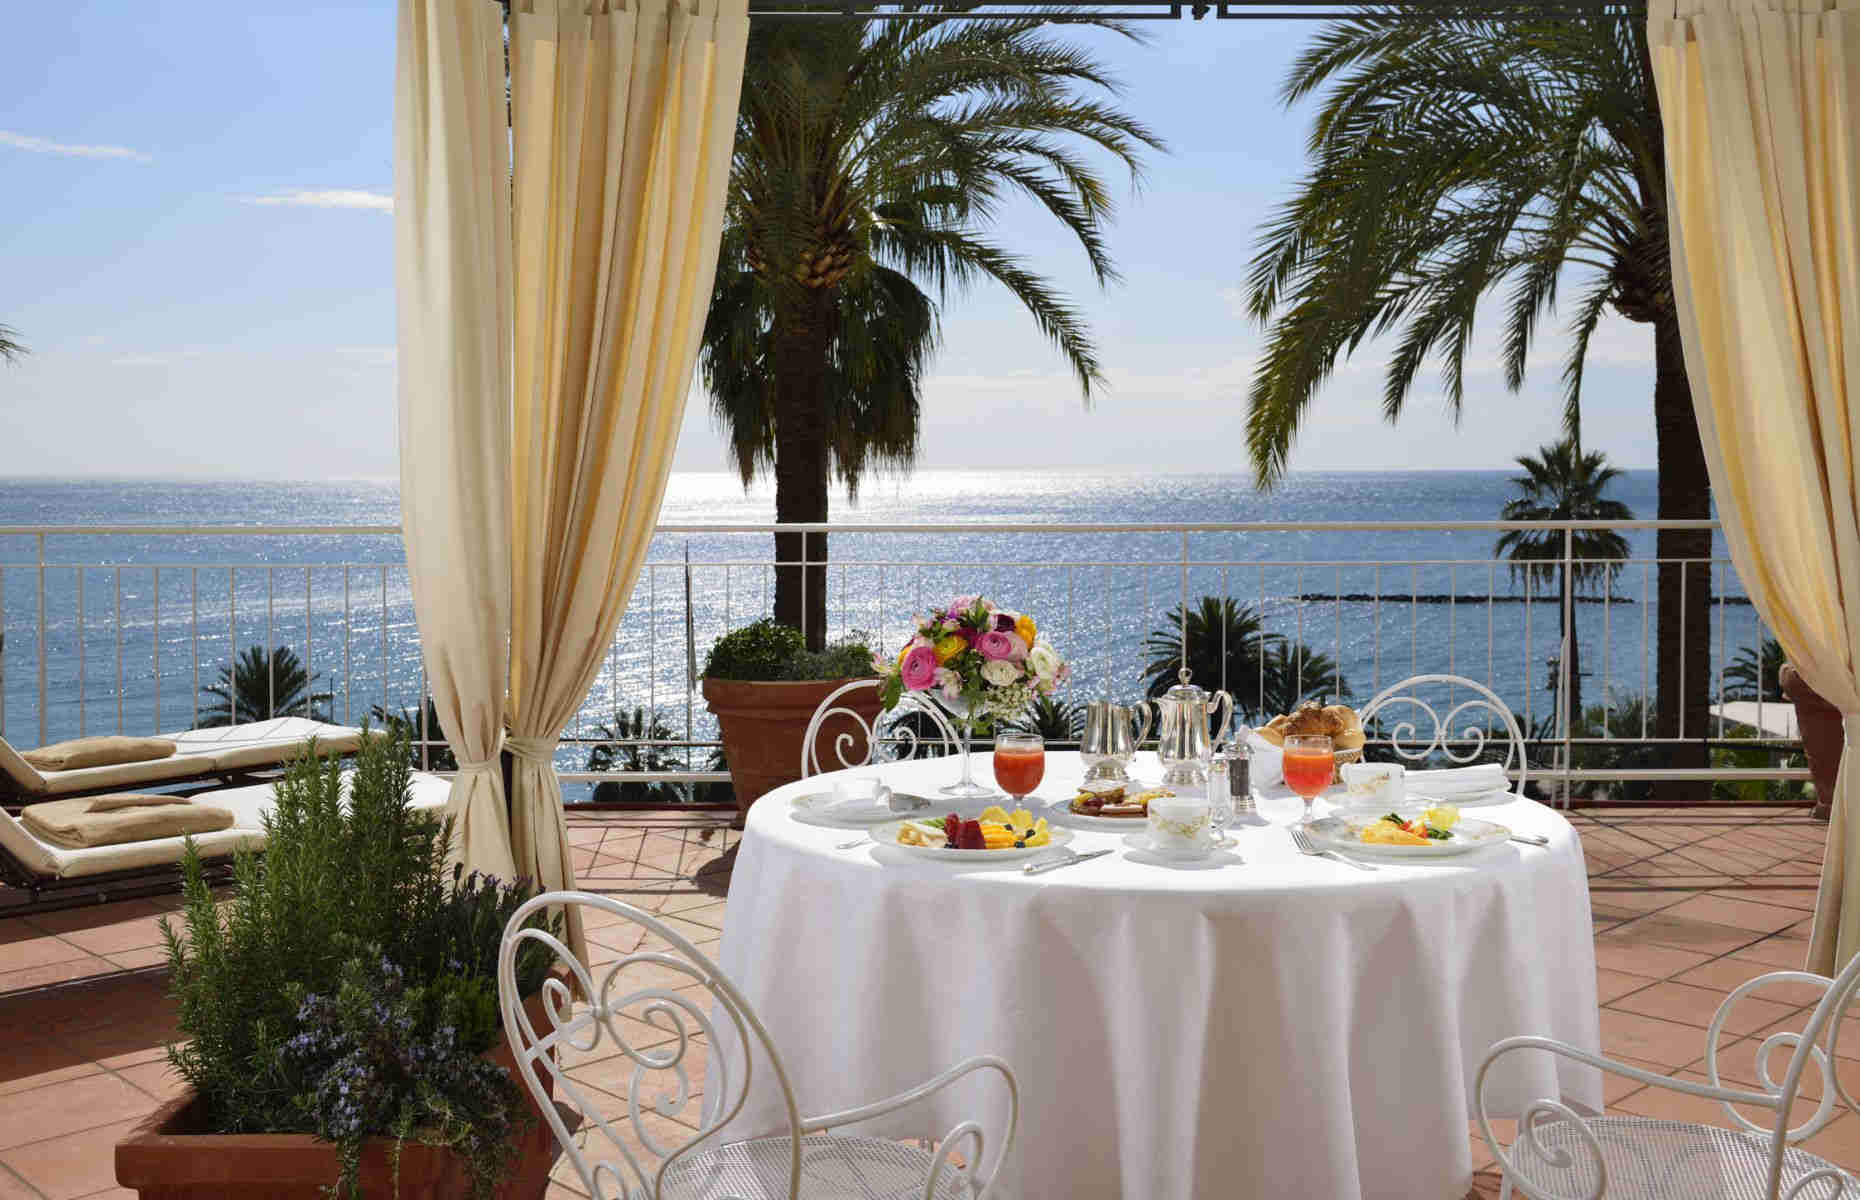 Petit déjeuner au Royal Hotel Sanremo - Hôtel Sanremo, Italie